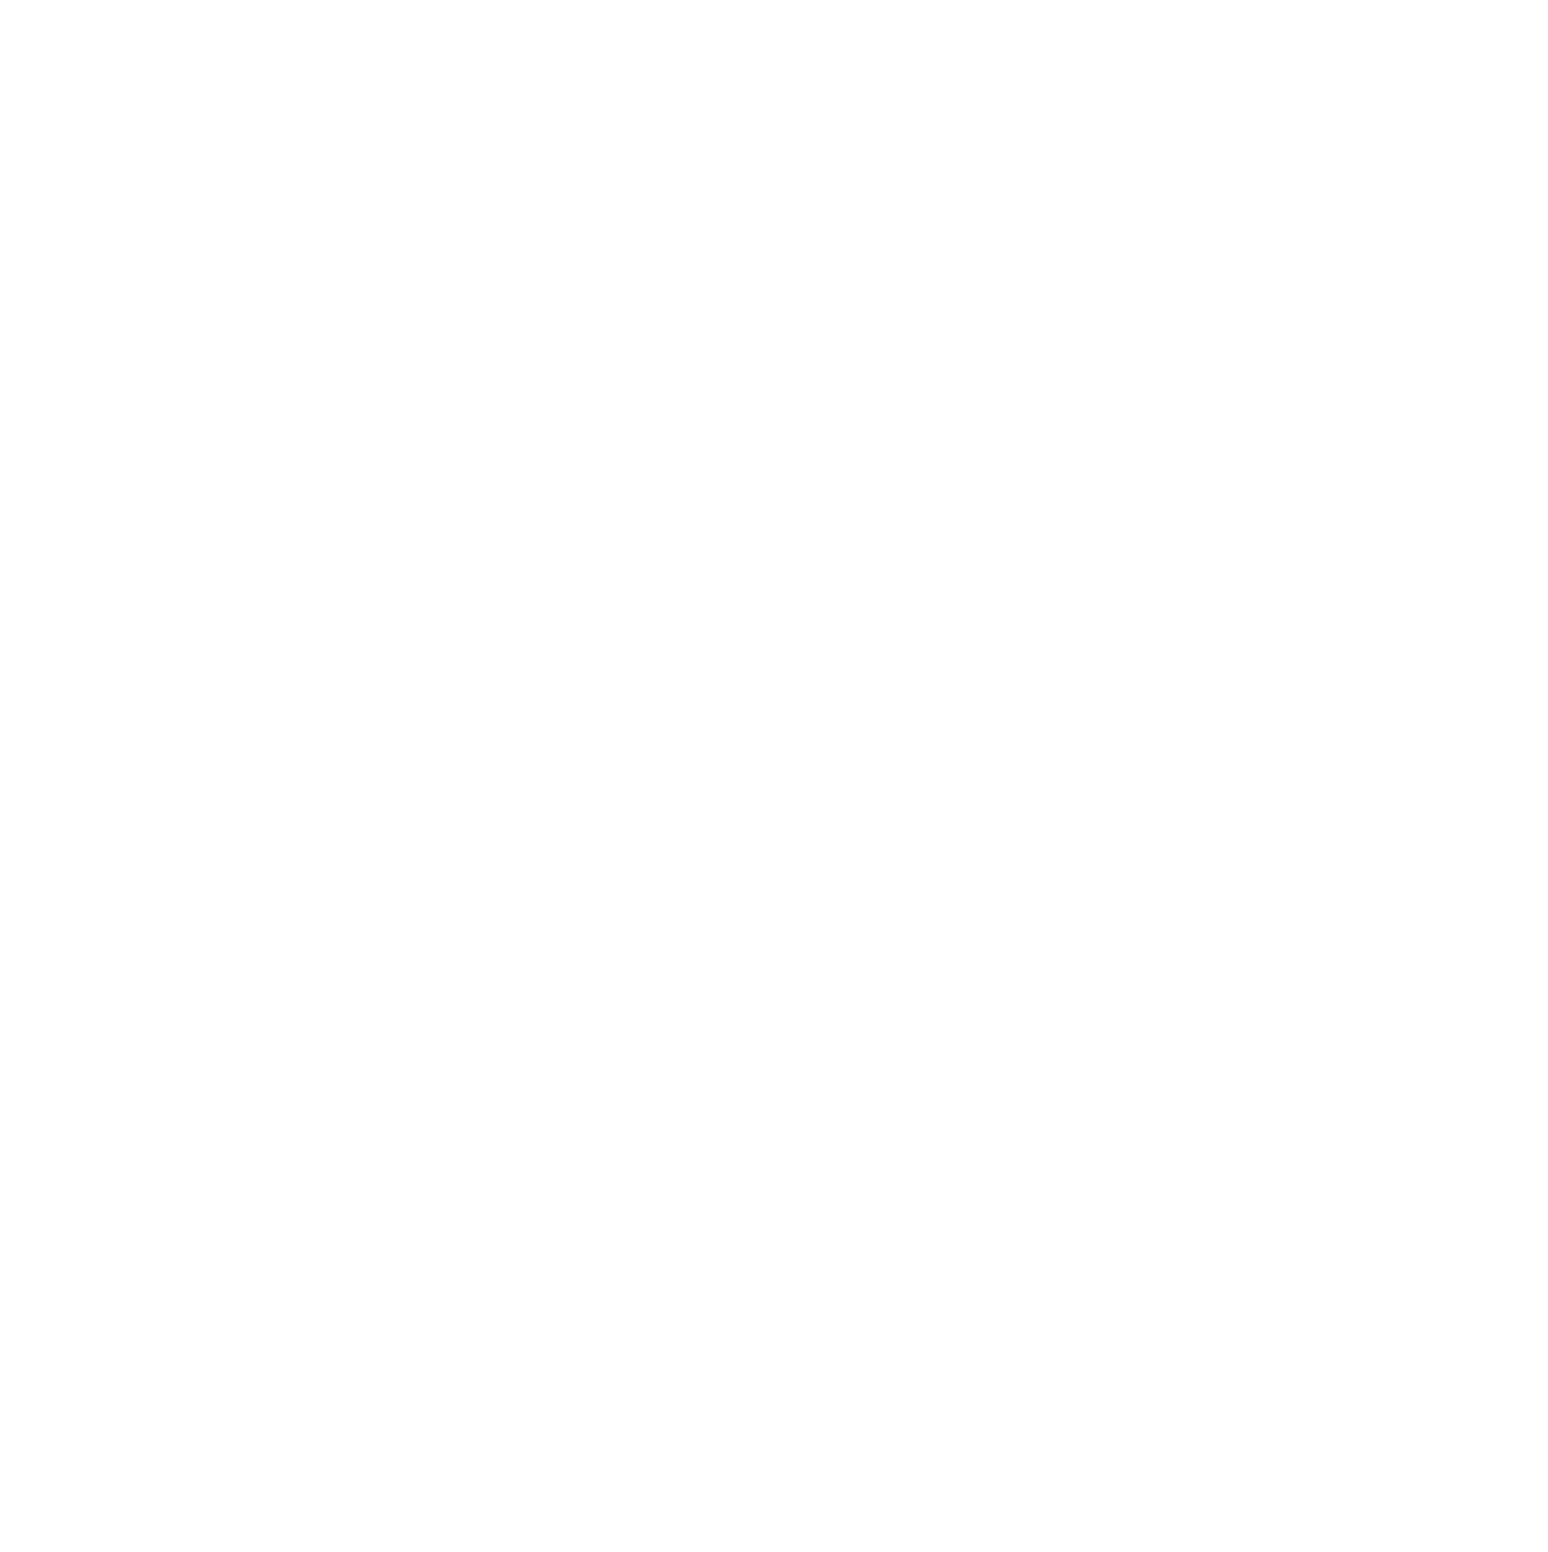 Lakeland Financial Corp logo for dark backgrounds (transparent PNG)